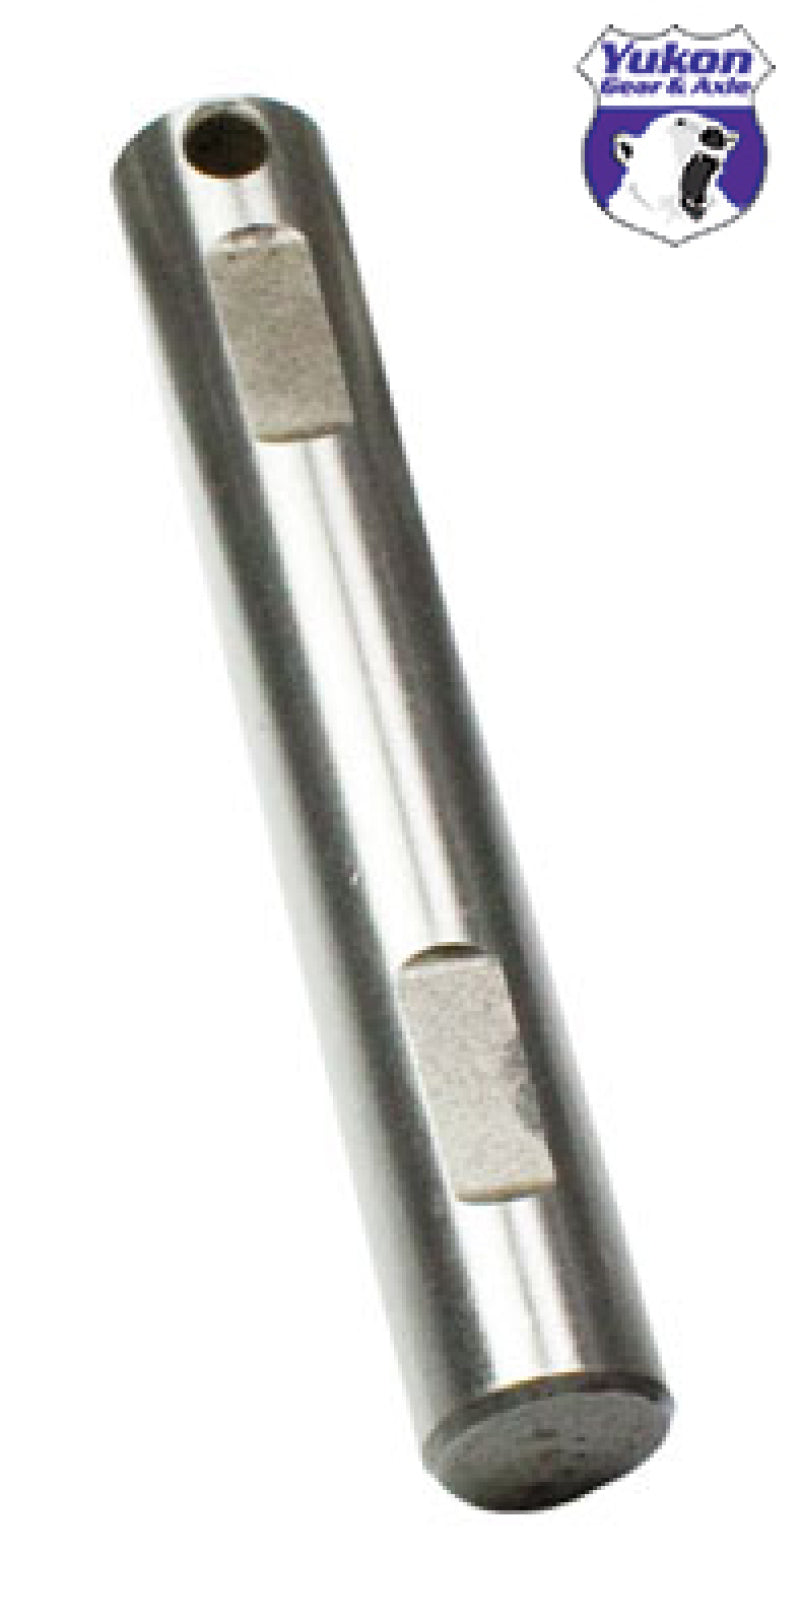 USA Standard Spartan Locker 8.5in GM Spartan Locker Cross Pin